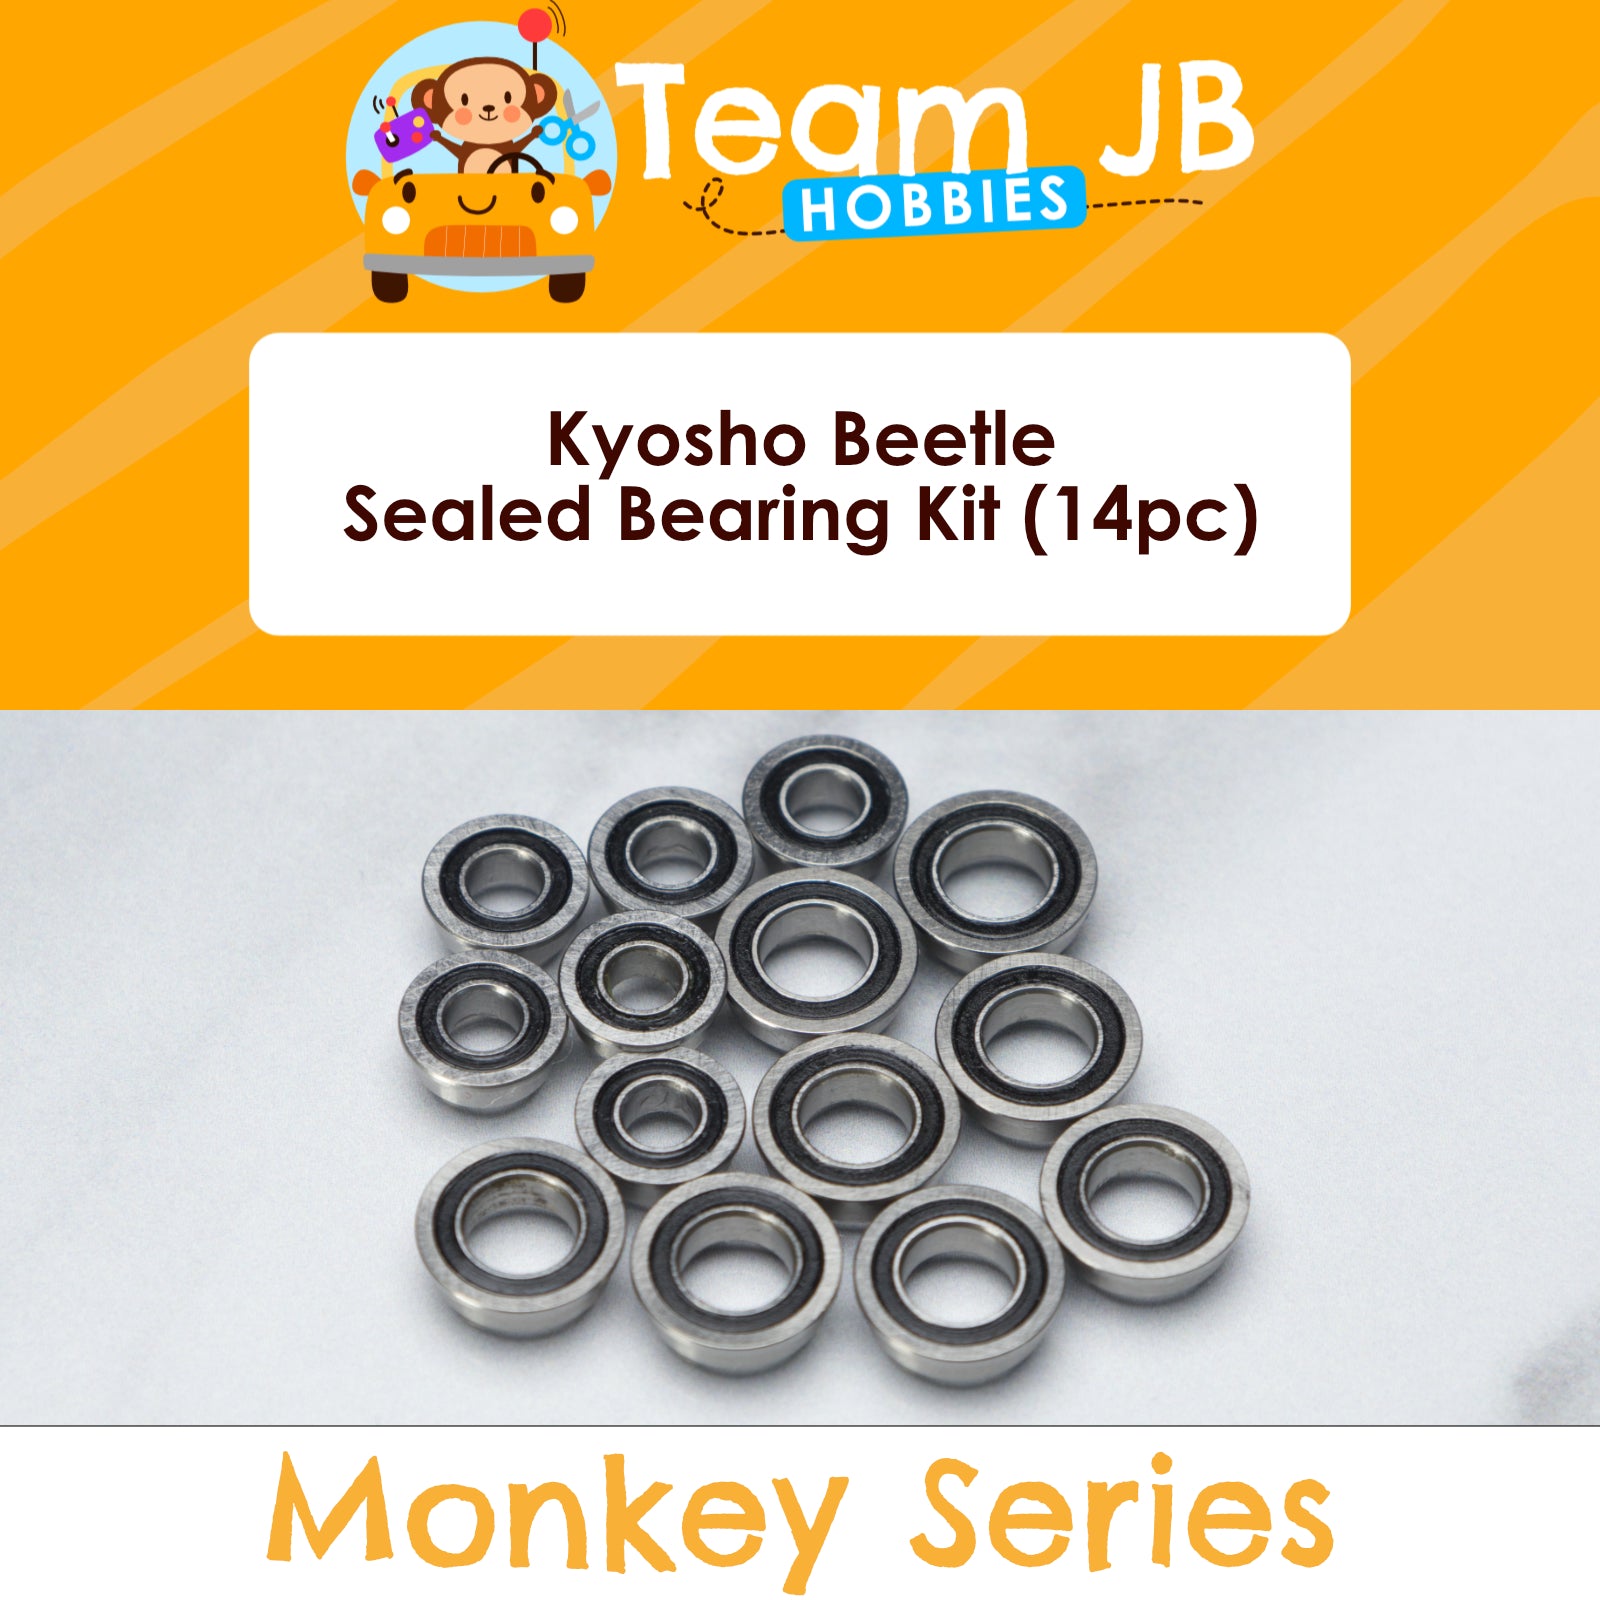 Kyosho Beetle - Sealed Bearing Kit